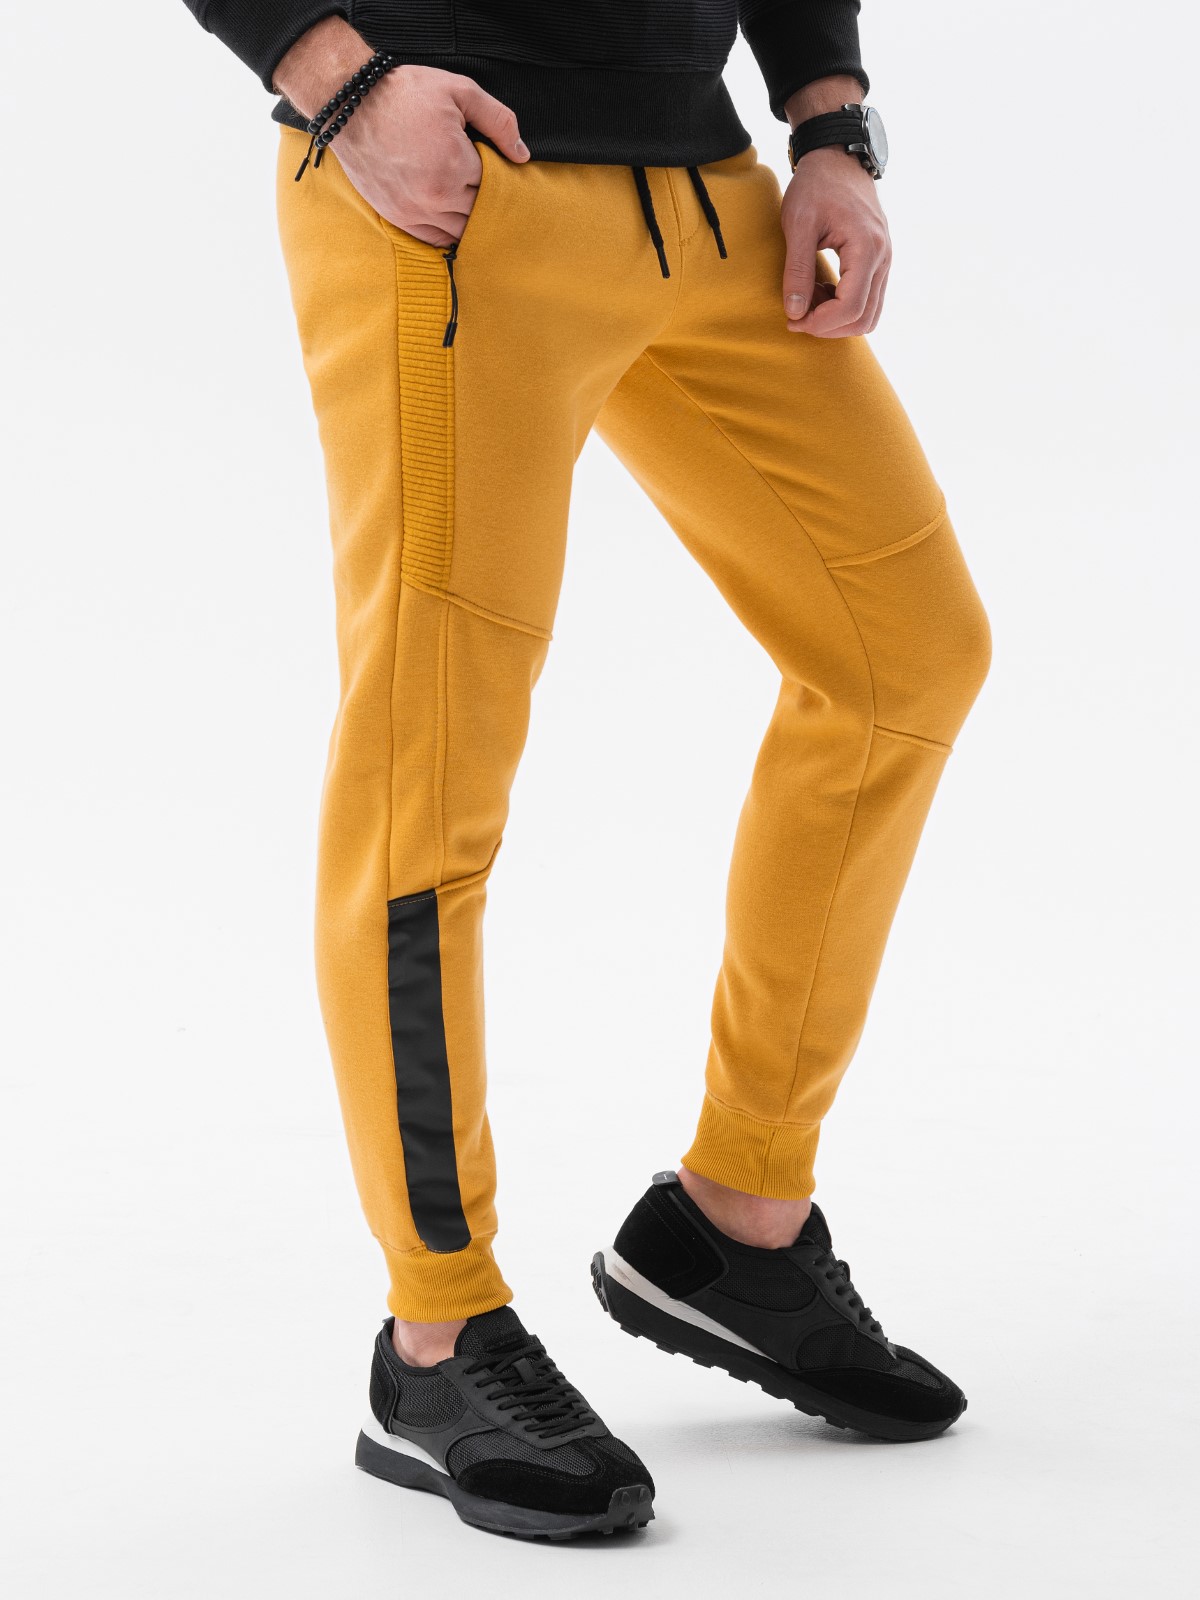 Spodnie męskie dresowe joggery P920 - żółte - M Ombre Clothing